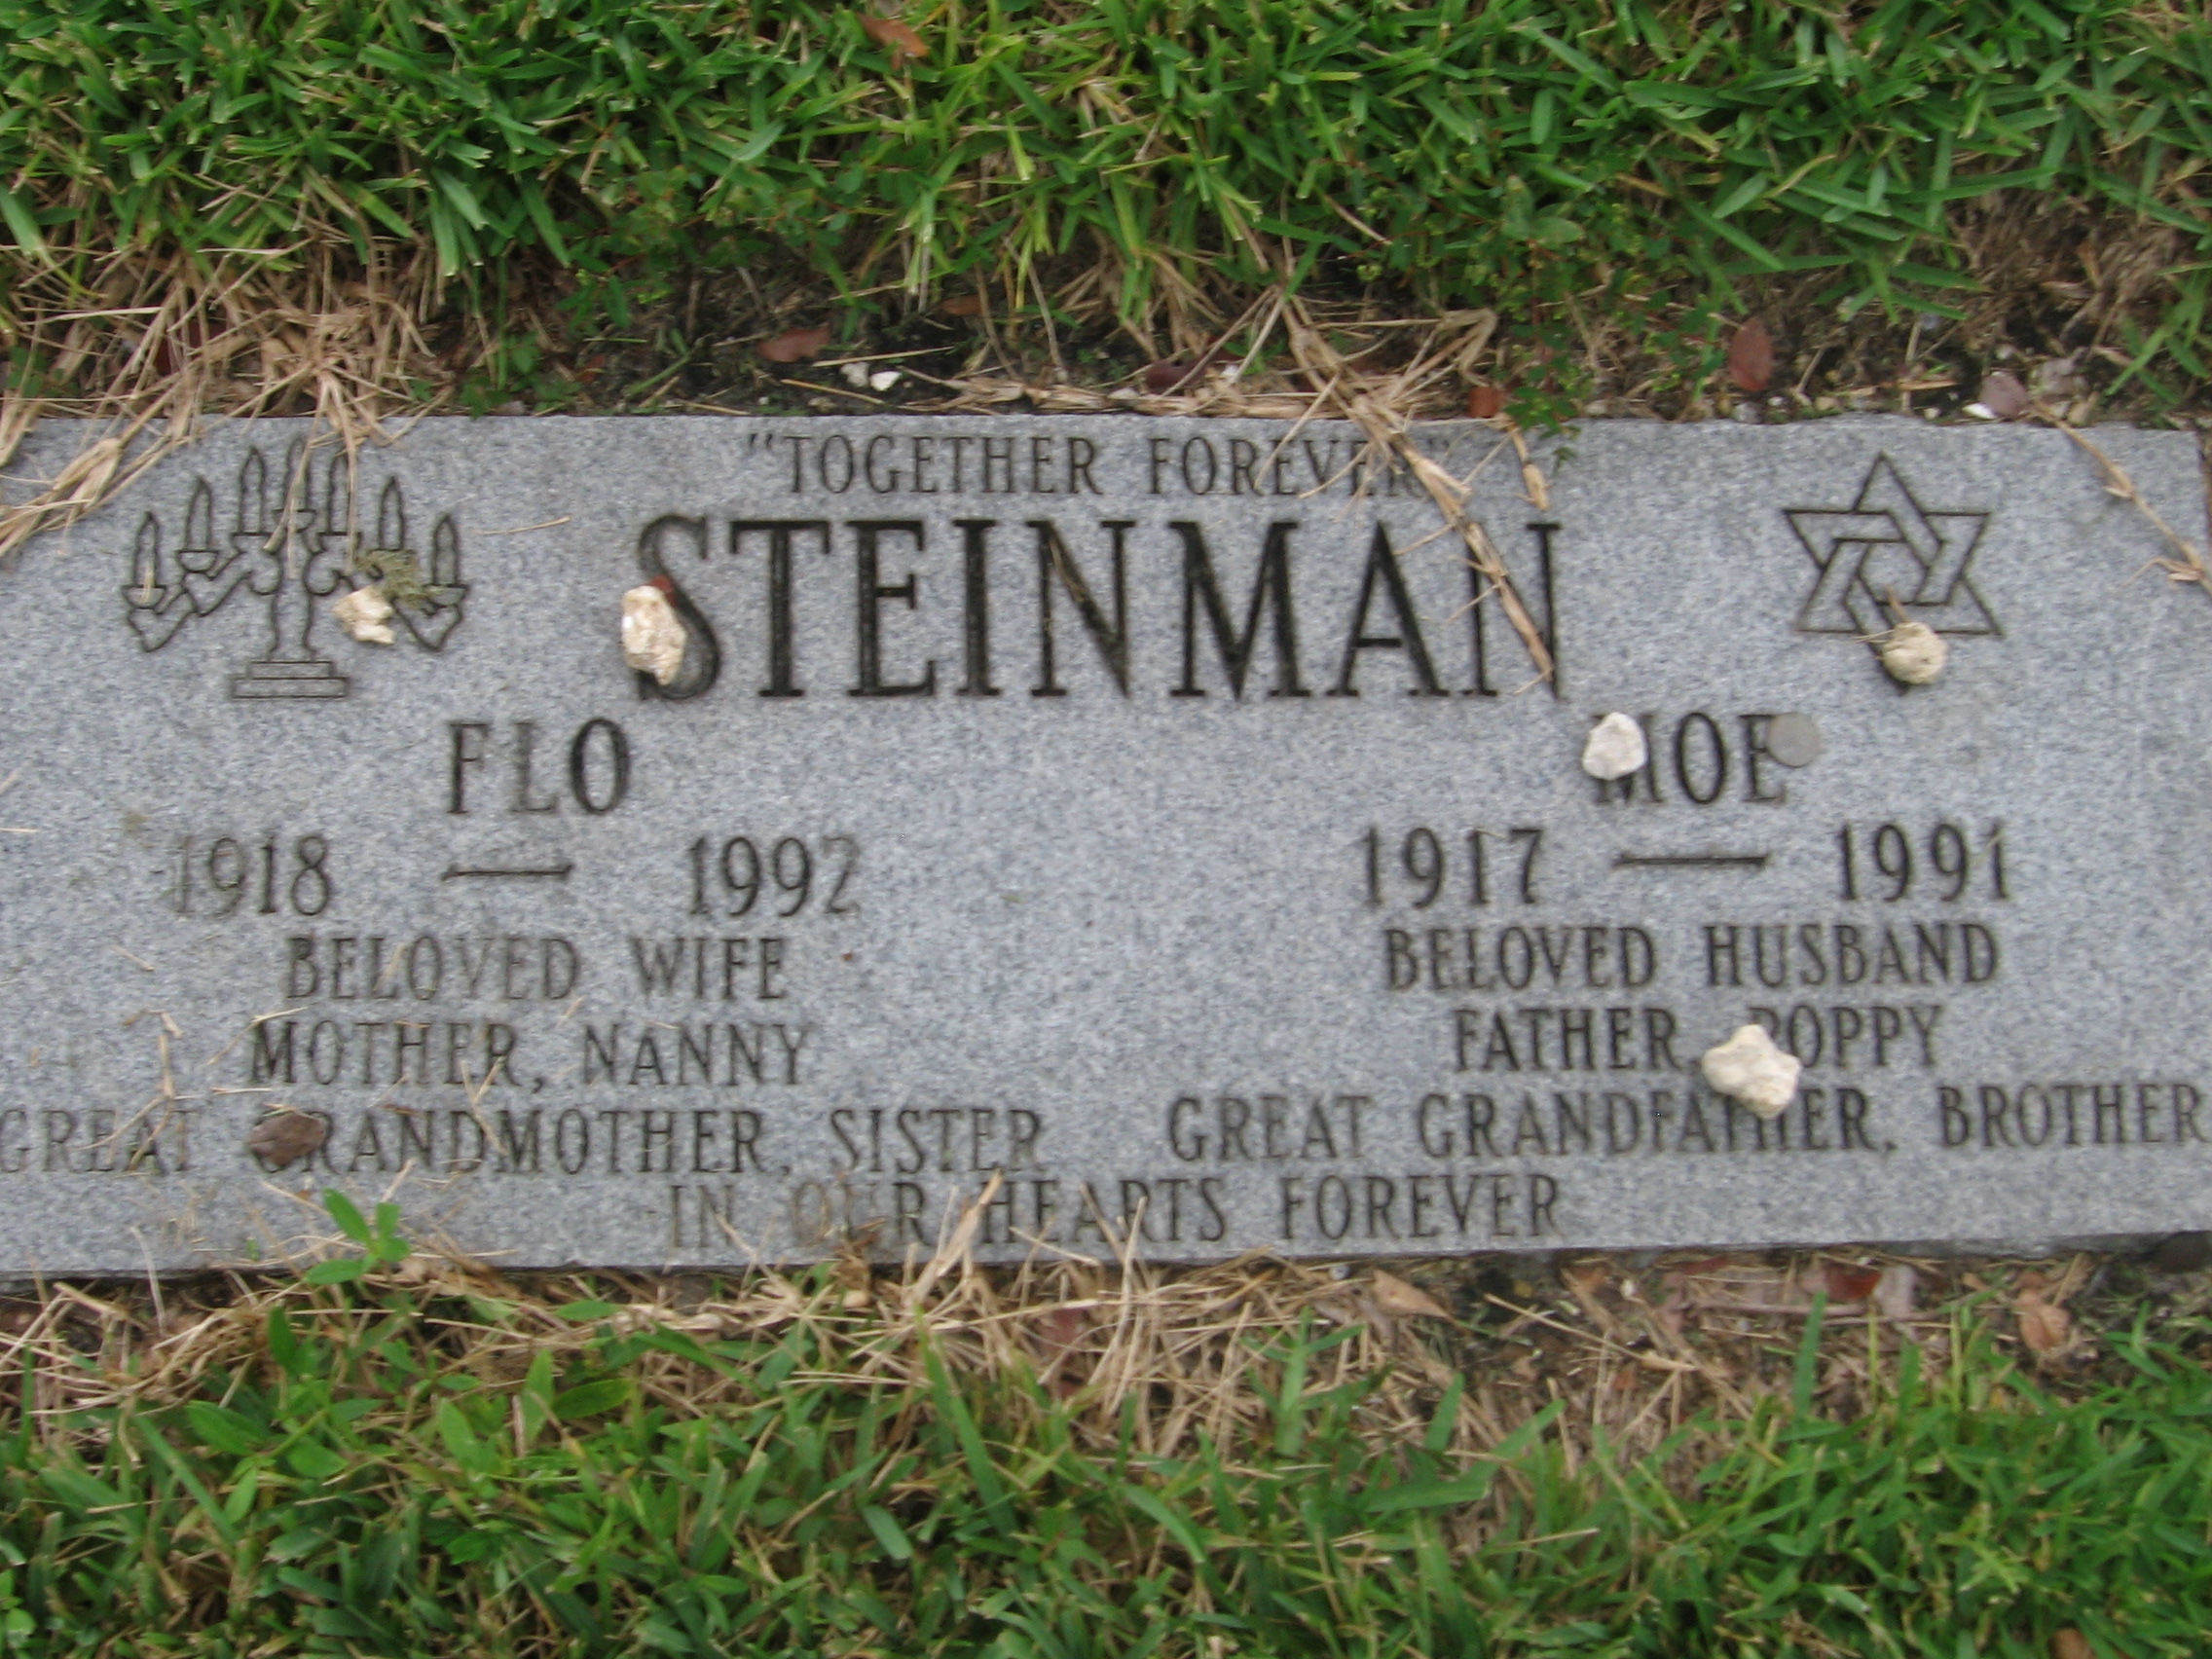 Flo Steinman